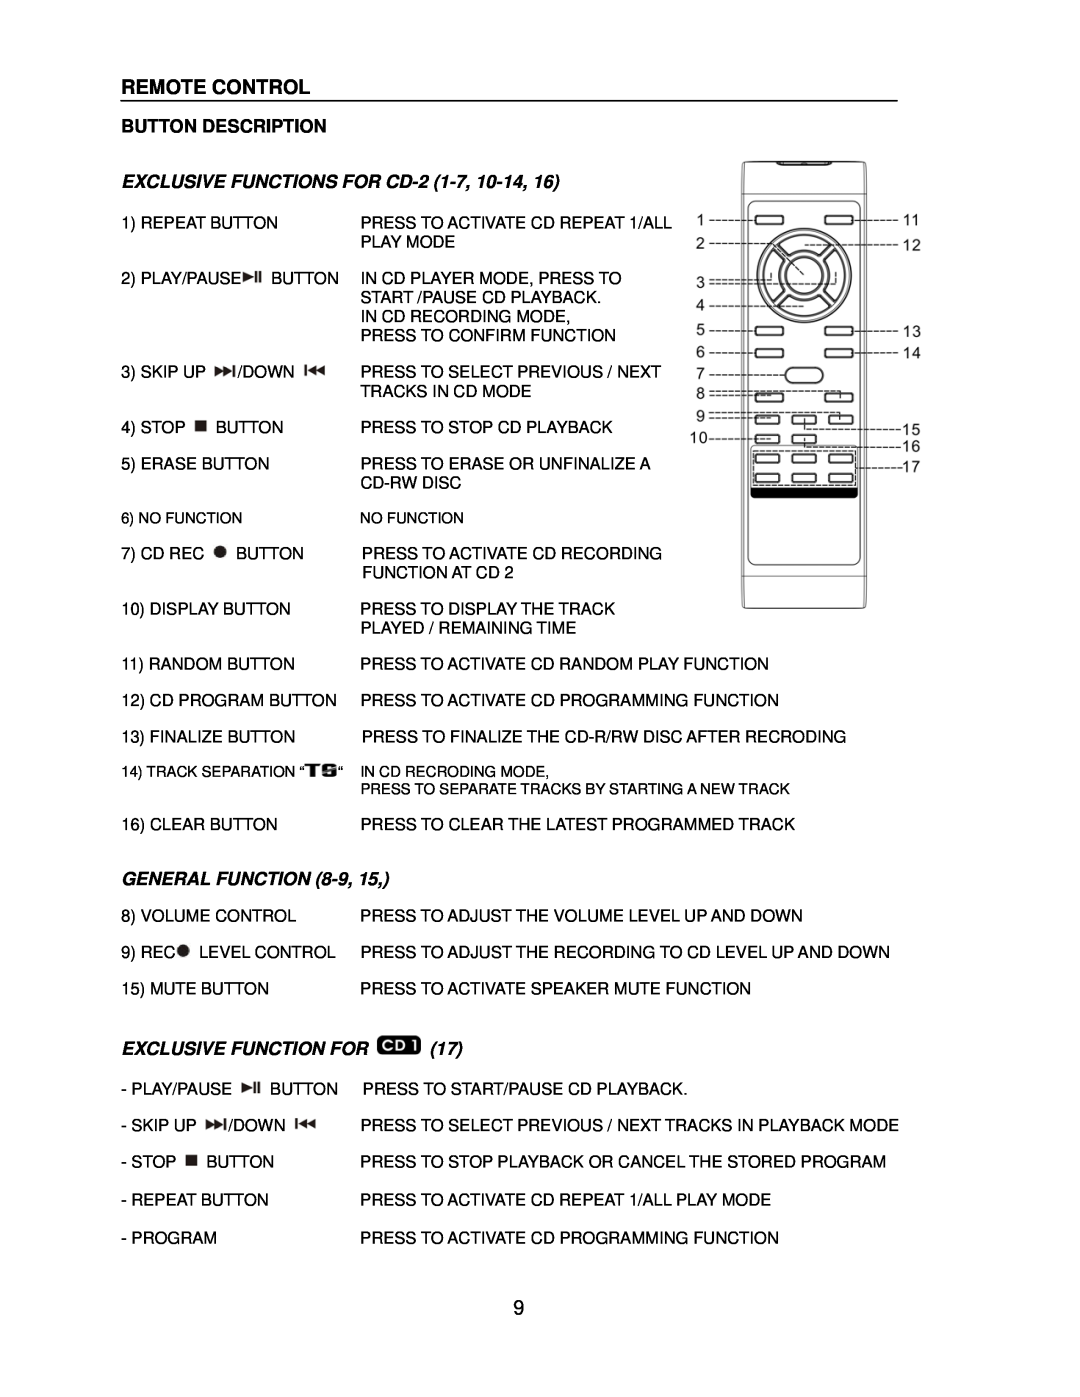 Jensen JTA-980 Remote Control, Button Description, EXCLUSIVE FUNCTIONS FOR CD-2 1-7, 10-14,16, GENERAL FUNCTION 8-9,15 